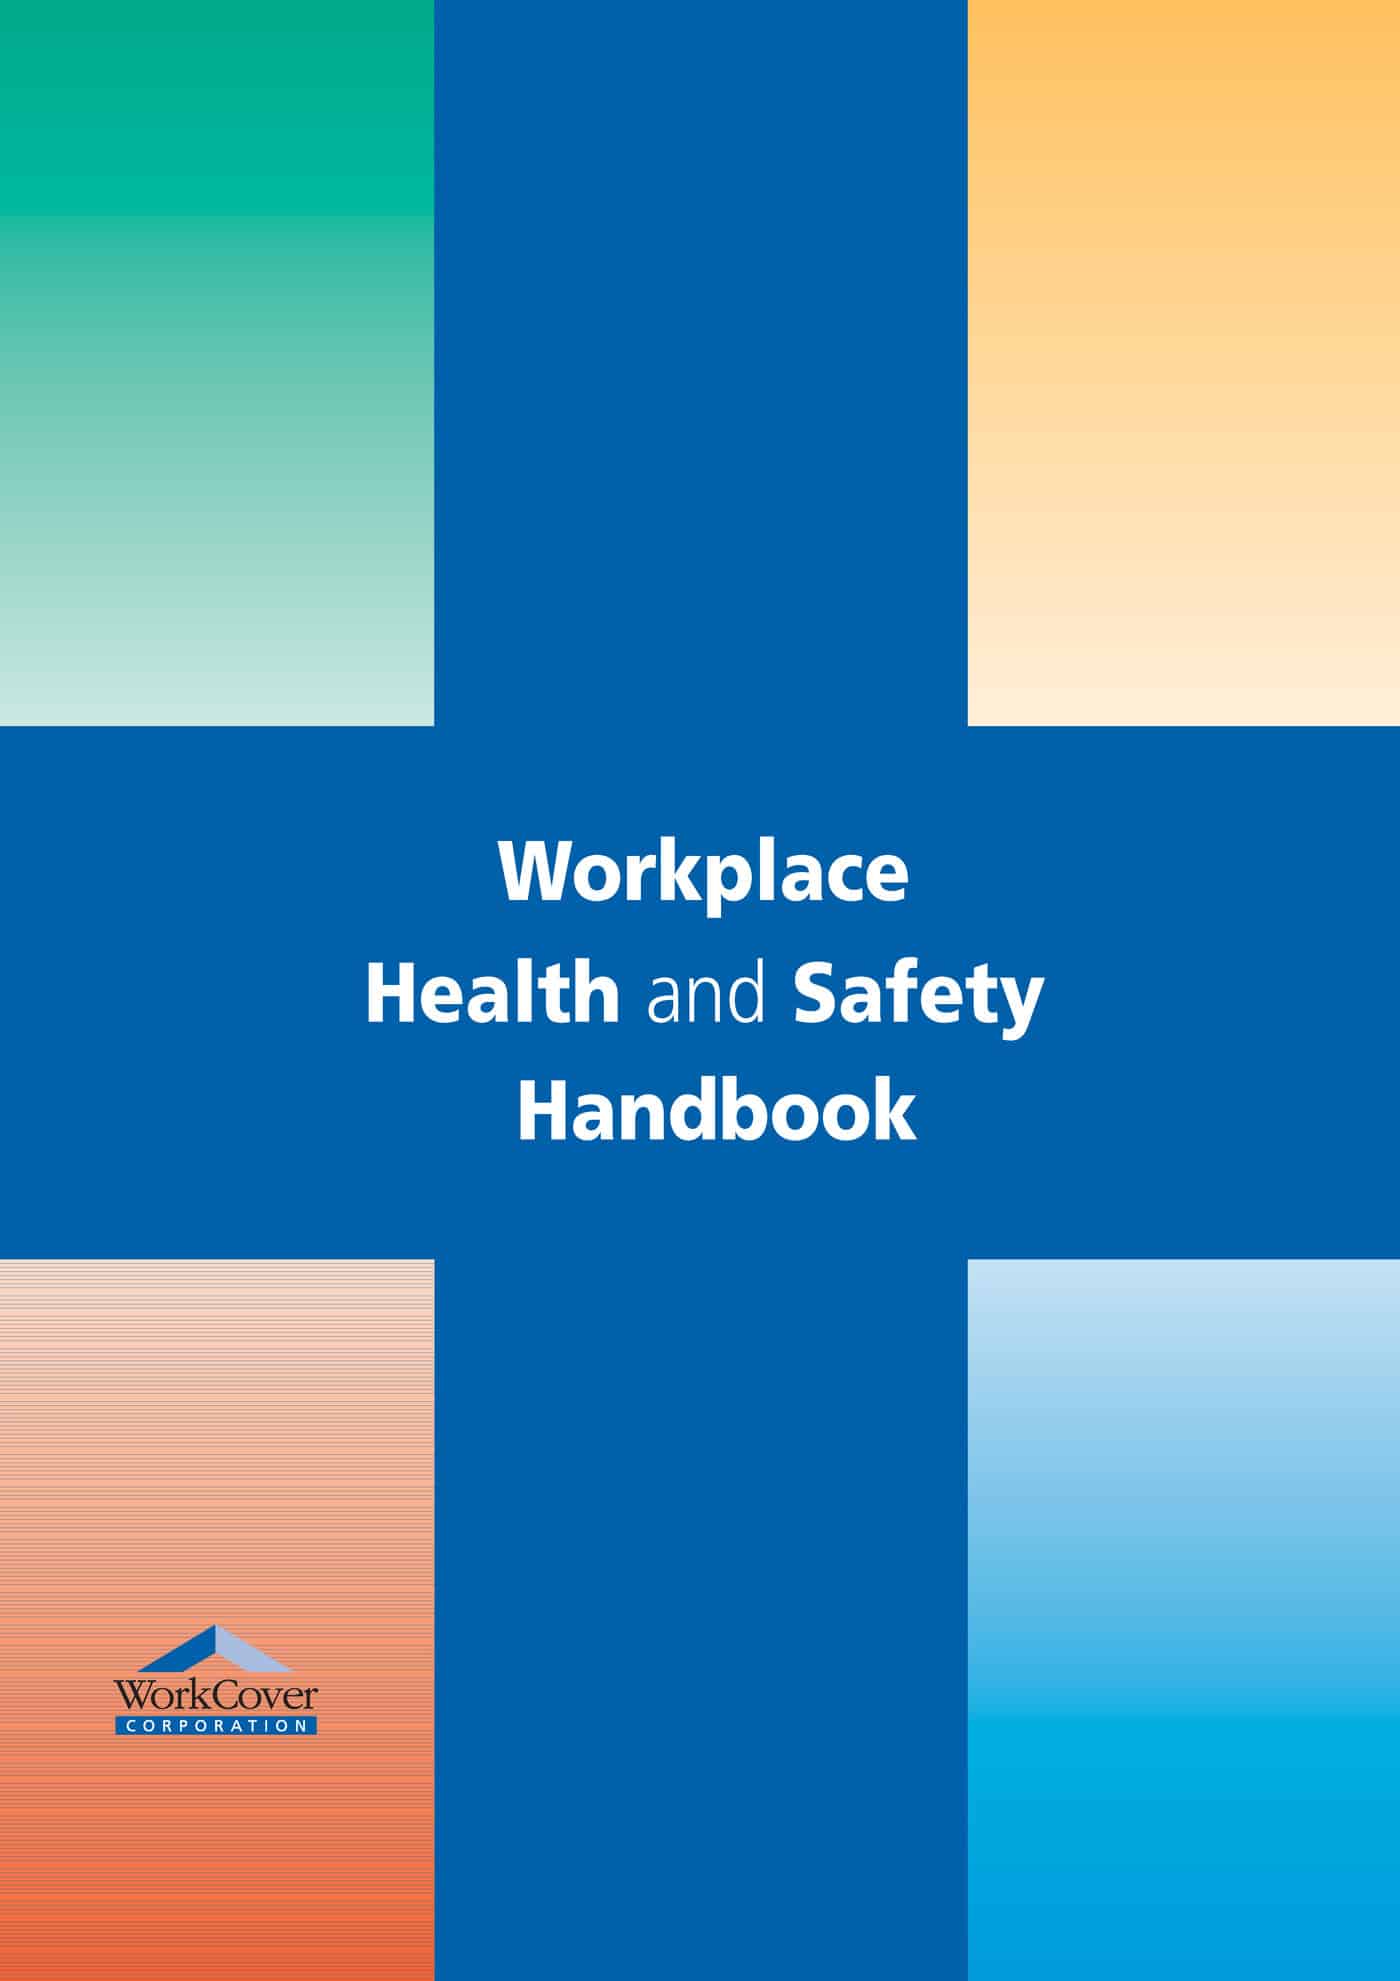 Home Health Care Employee Manual